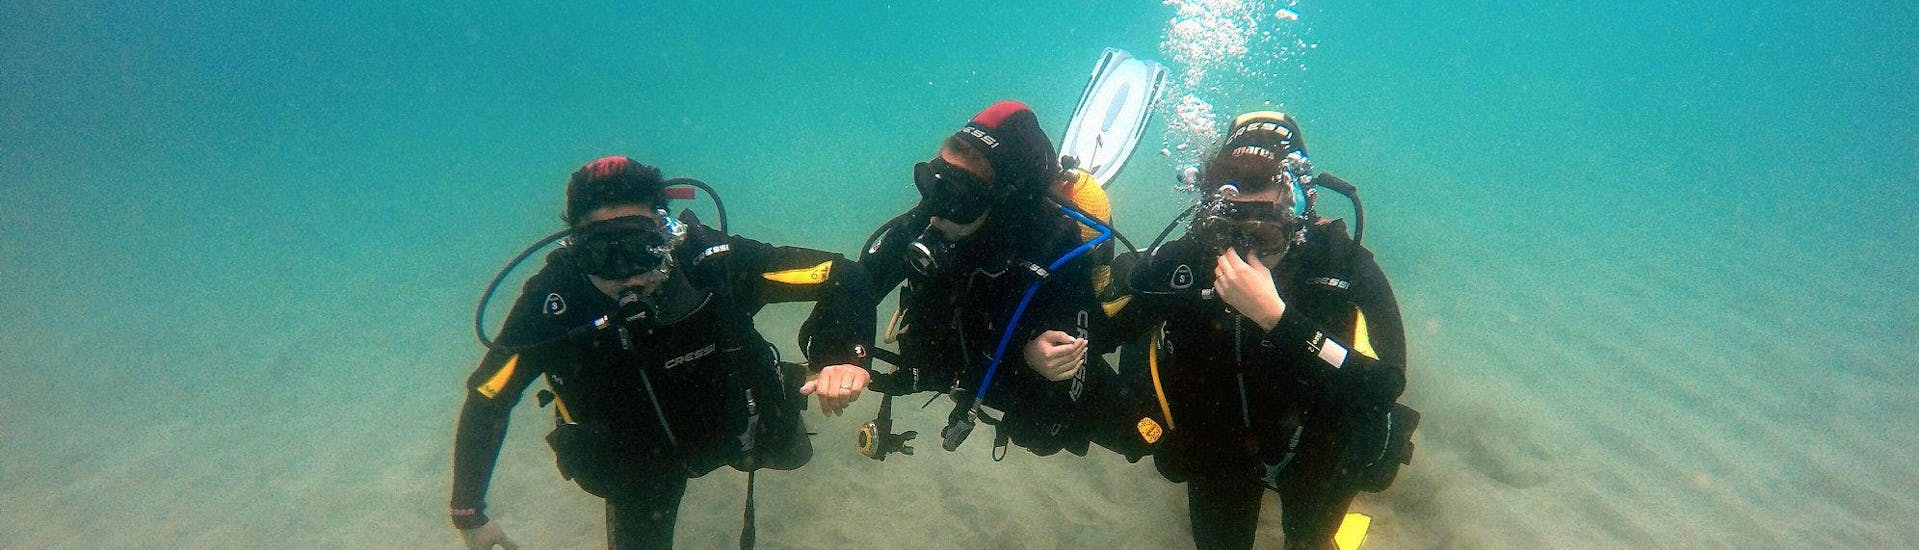 PADI Open Water Diver Tauchkurs für Anfänger in Costa Calma.